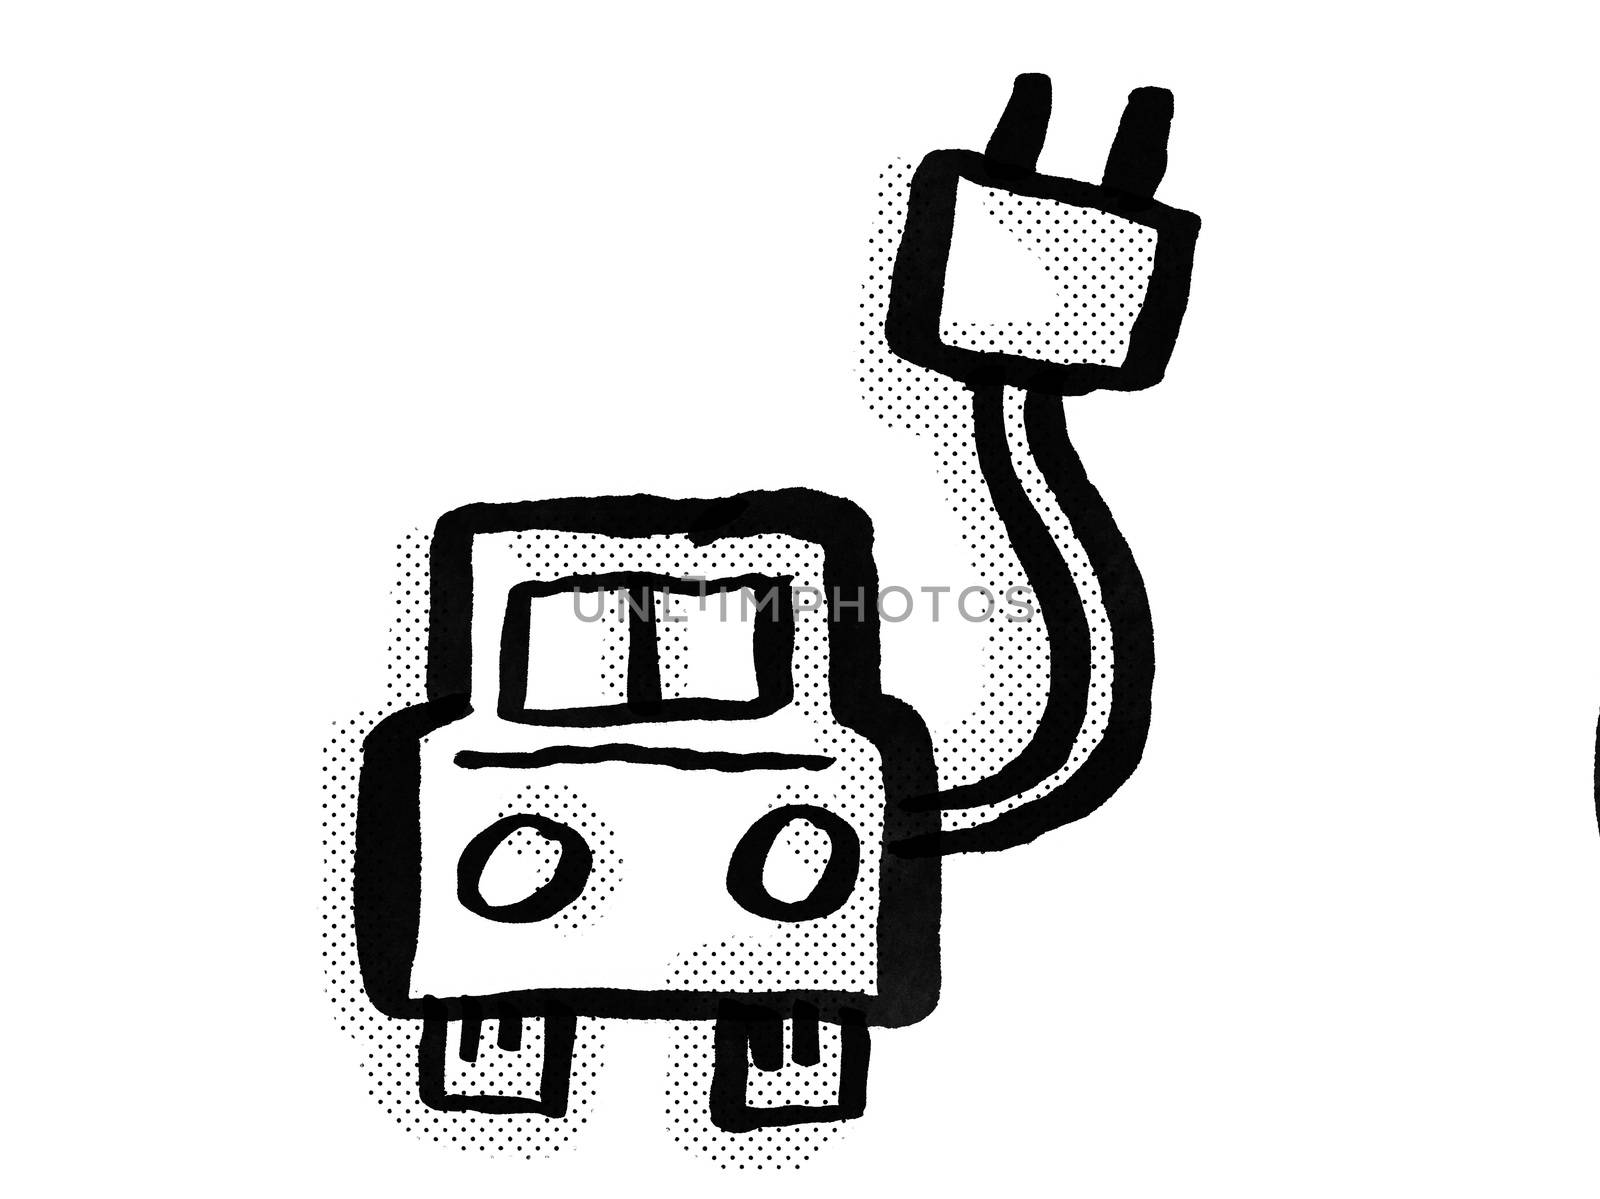 Electric Vehicle EV Charging Station Cartoon Drawing by patrimonio